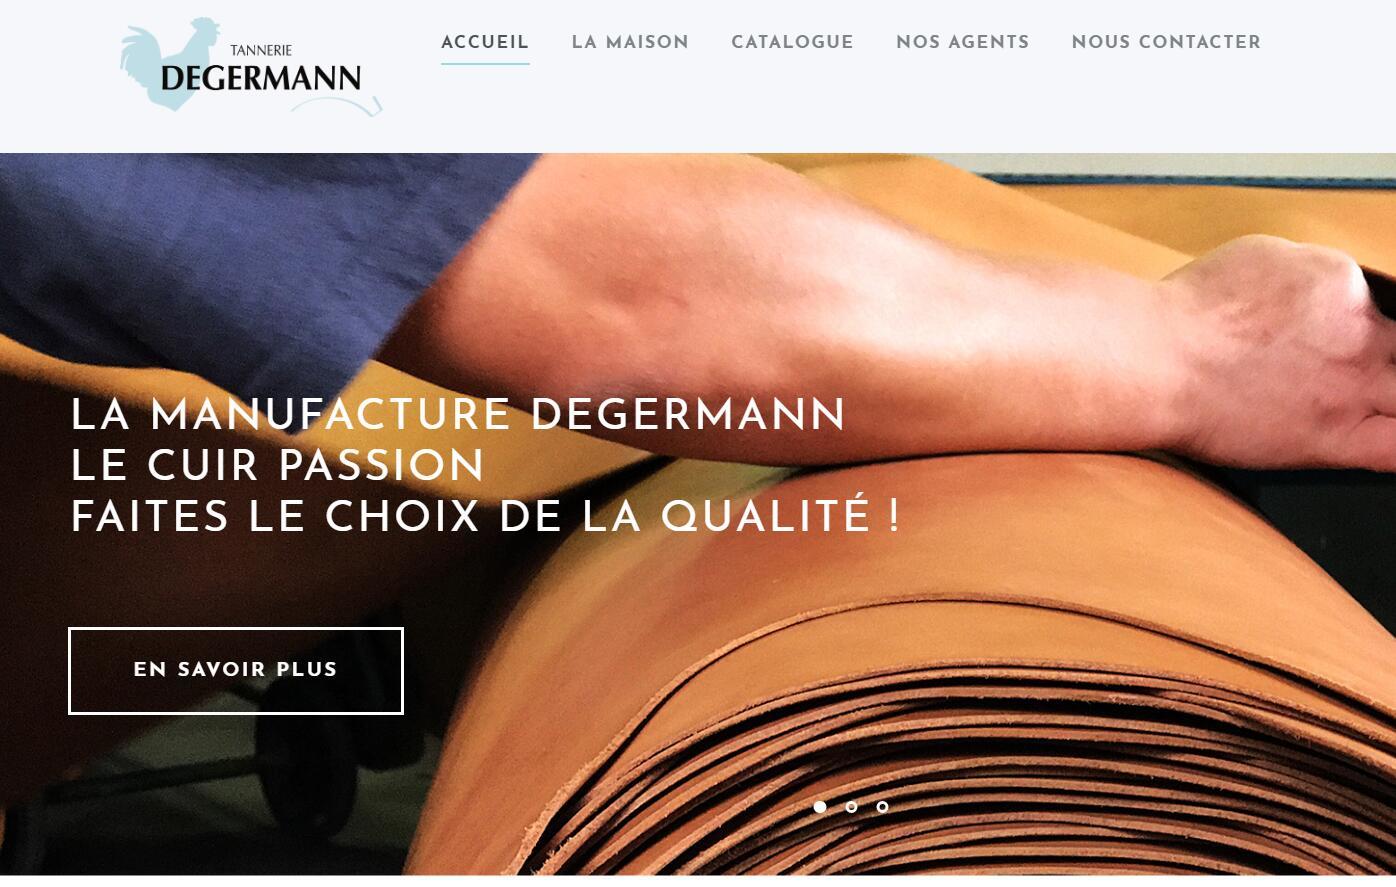 20191017_Chanel將收購法國皮革廠Degermann，進一步加強對供應鏈的控制力6.jpg